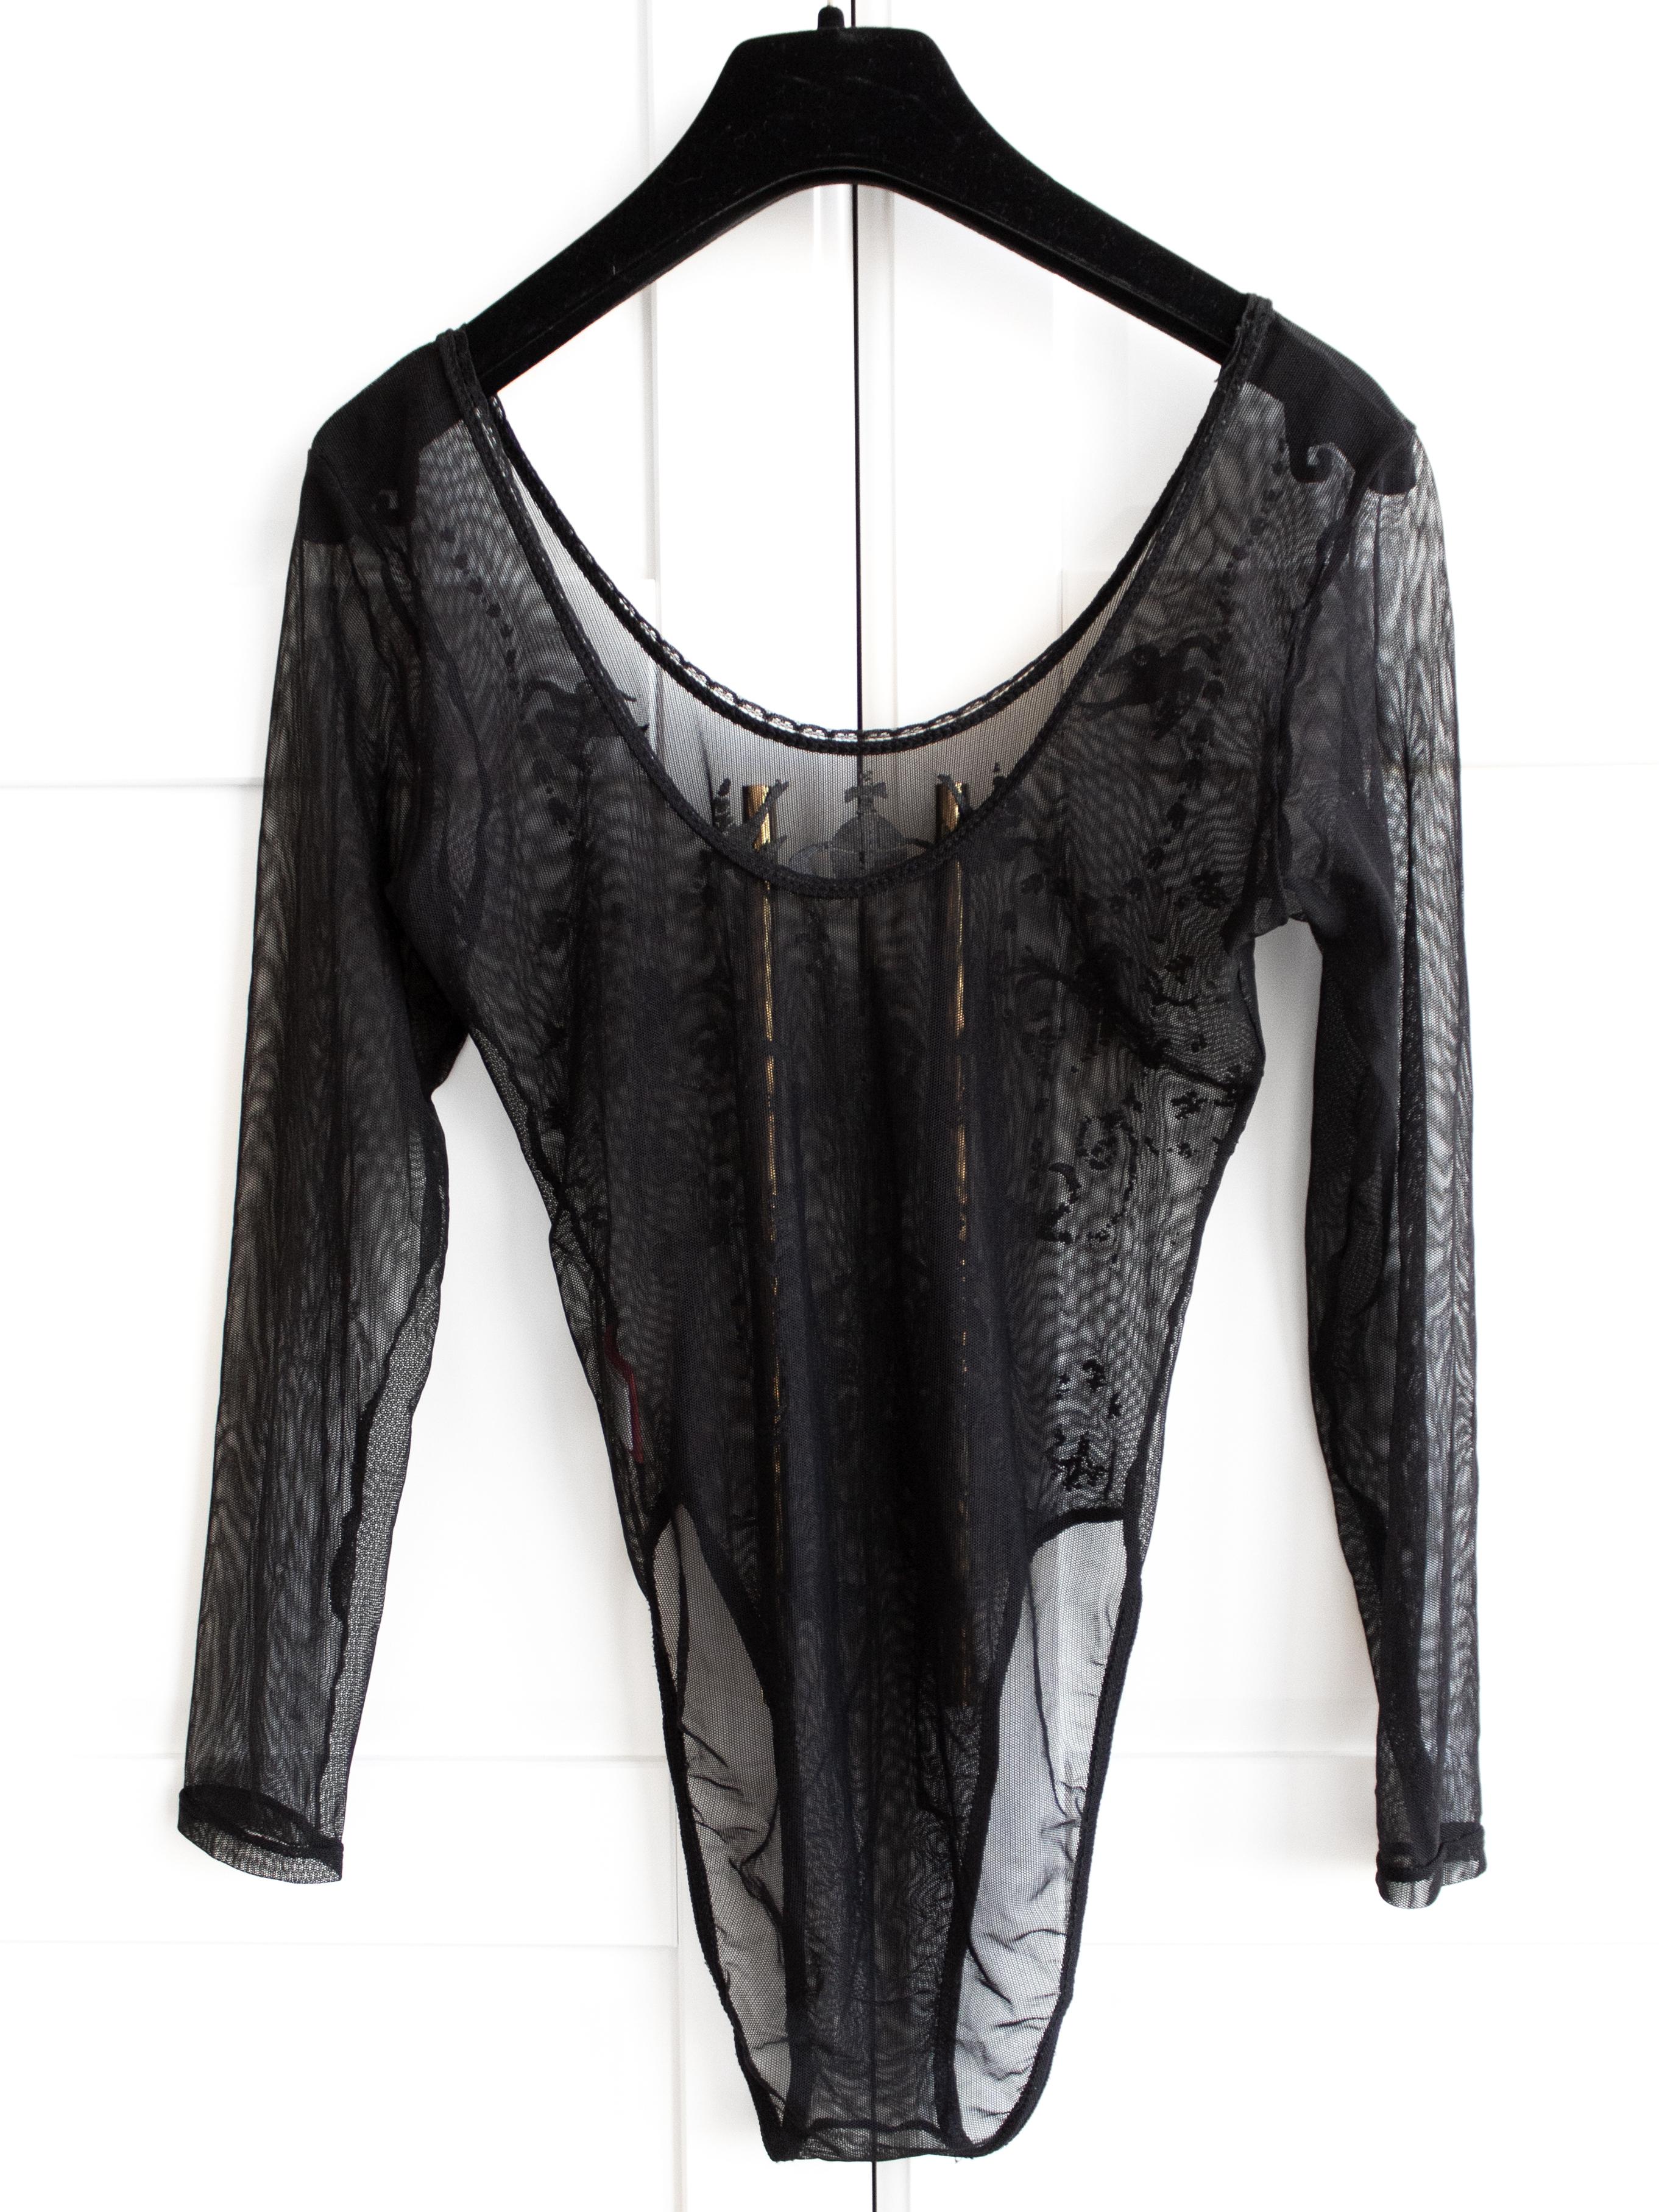 Vivienne Westwood x Sock Shop 1992 Boulle Sheer Mesh Black Bodysuit In Good Condition For Sale In Jersey City, NJ